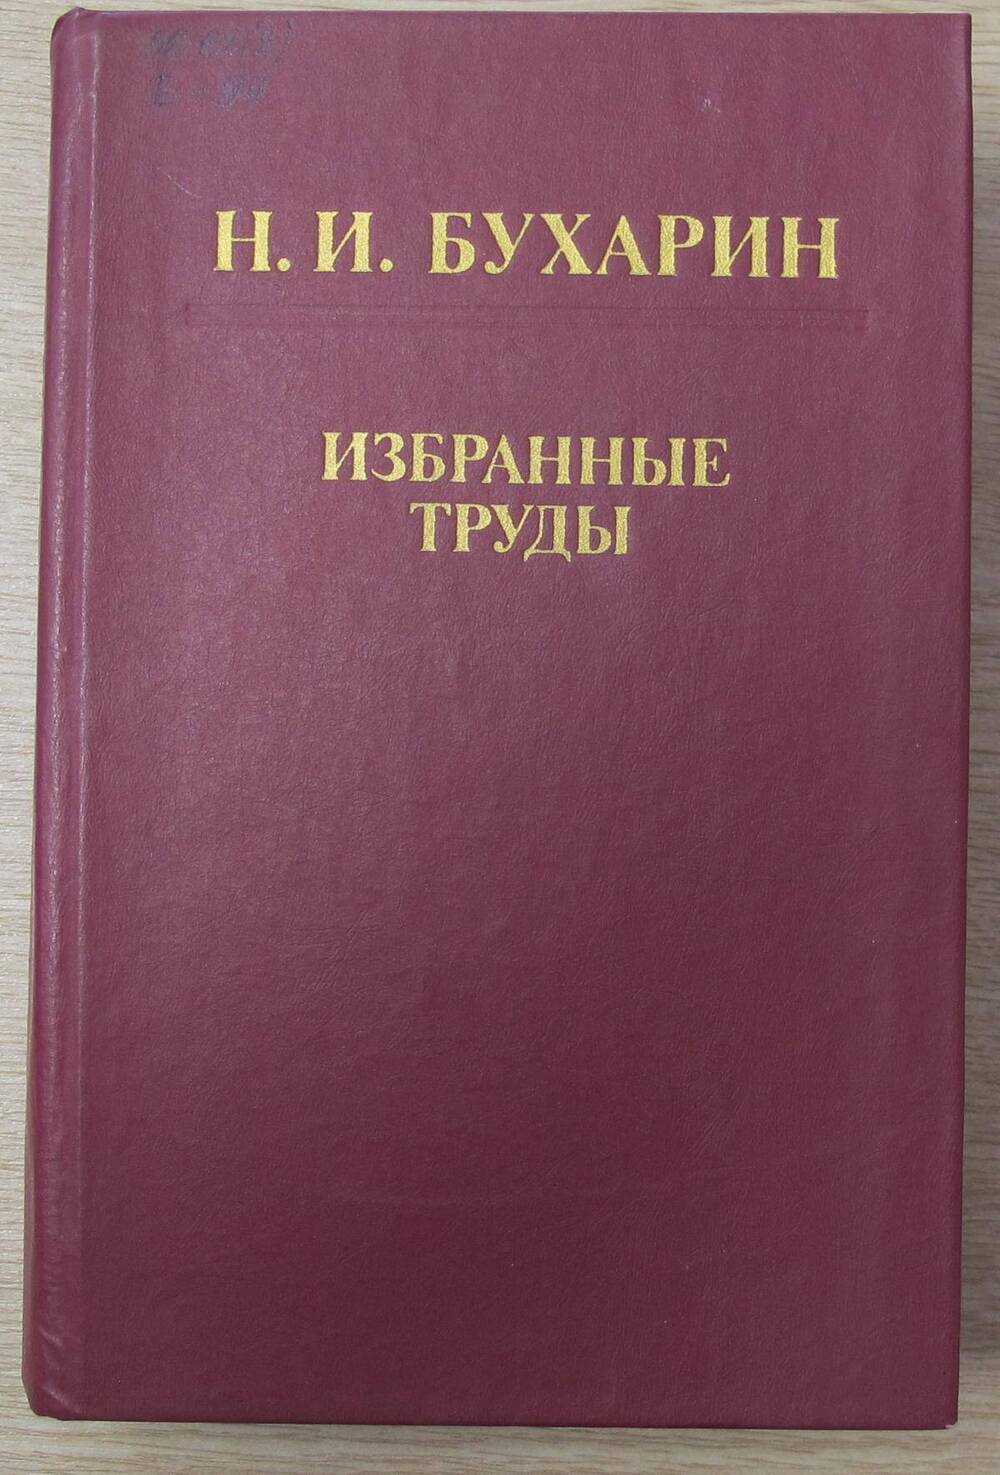 Книга Избранные труды.